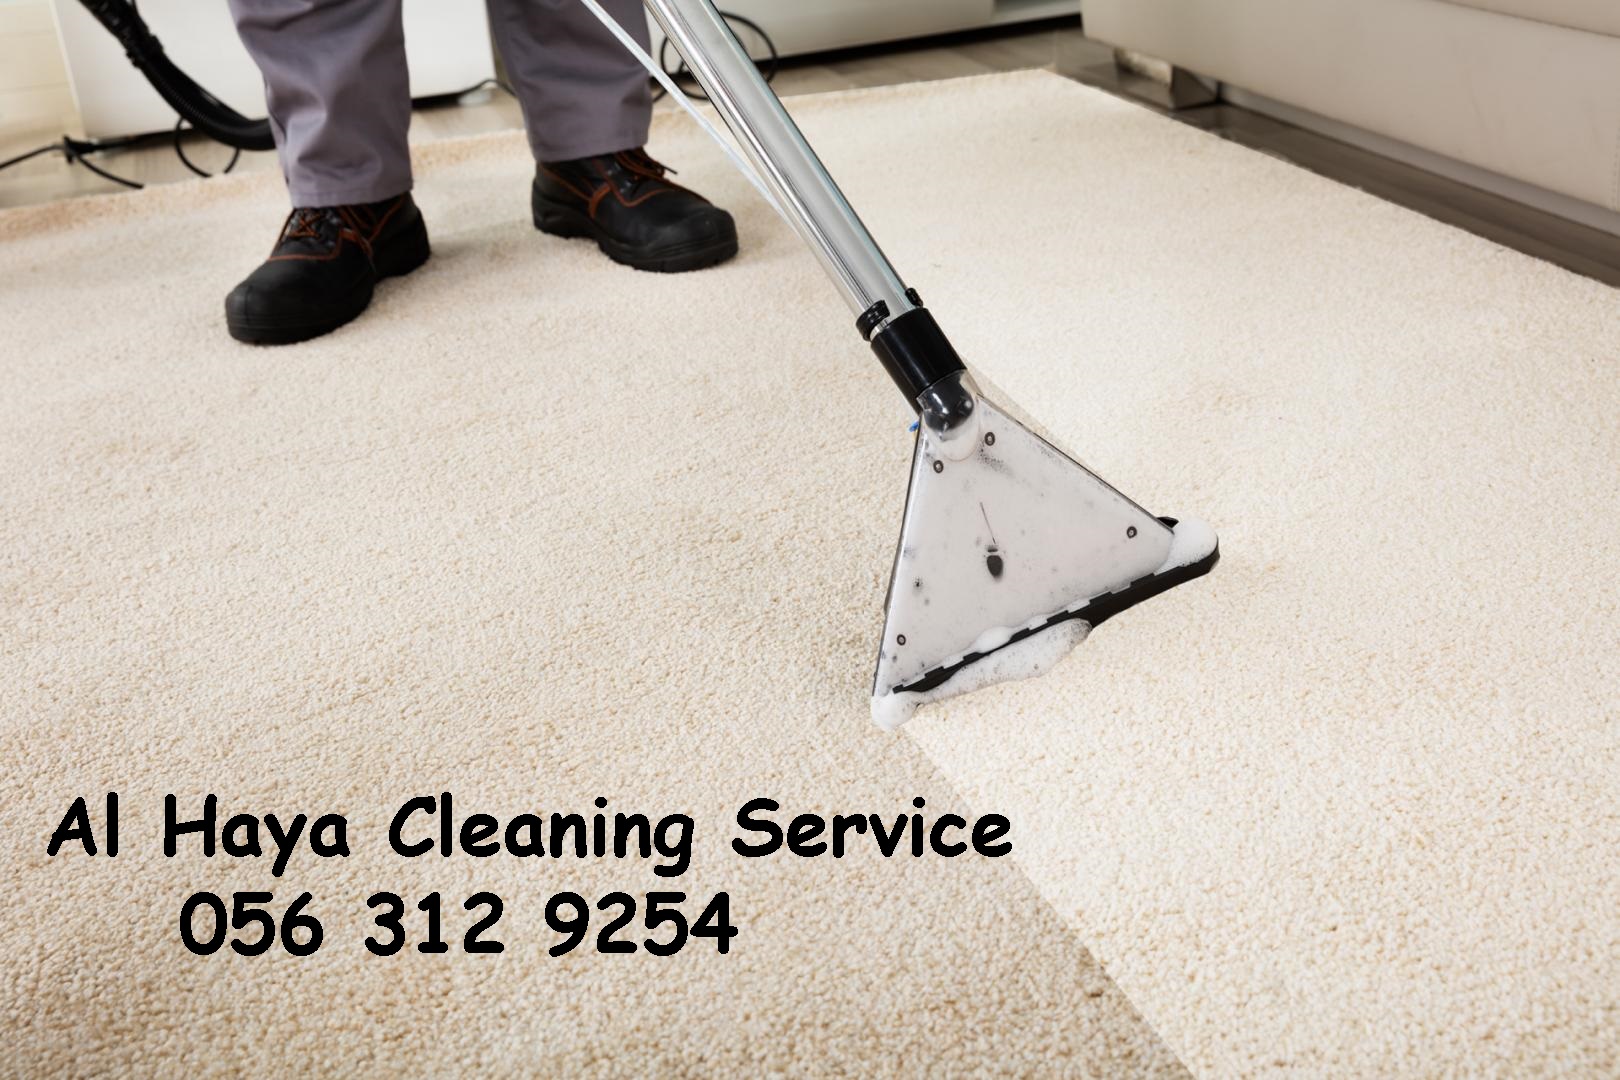 Sofa Cleaning In Jumeirah 0563129254 Carpet Shampooing Jvc